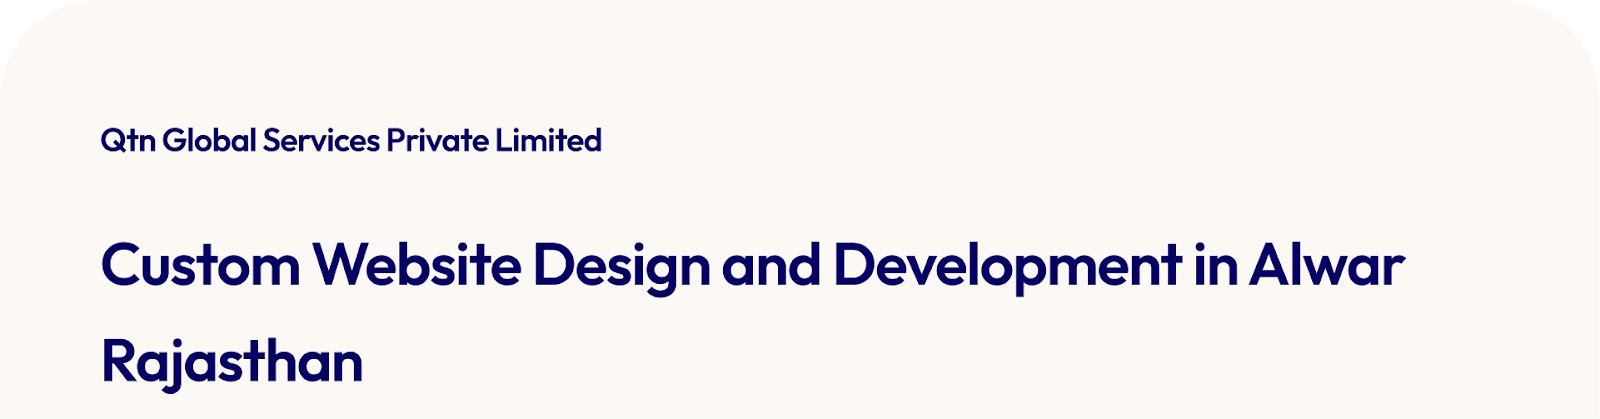 Custom Website Design and Development in Alwar Rajasthan 